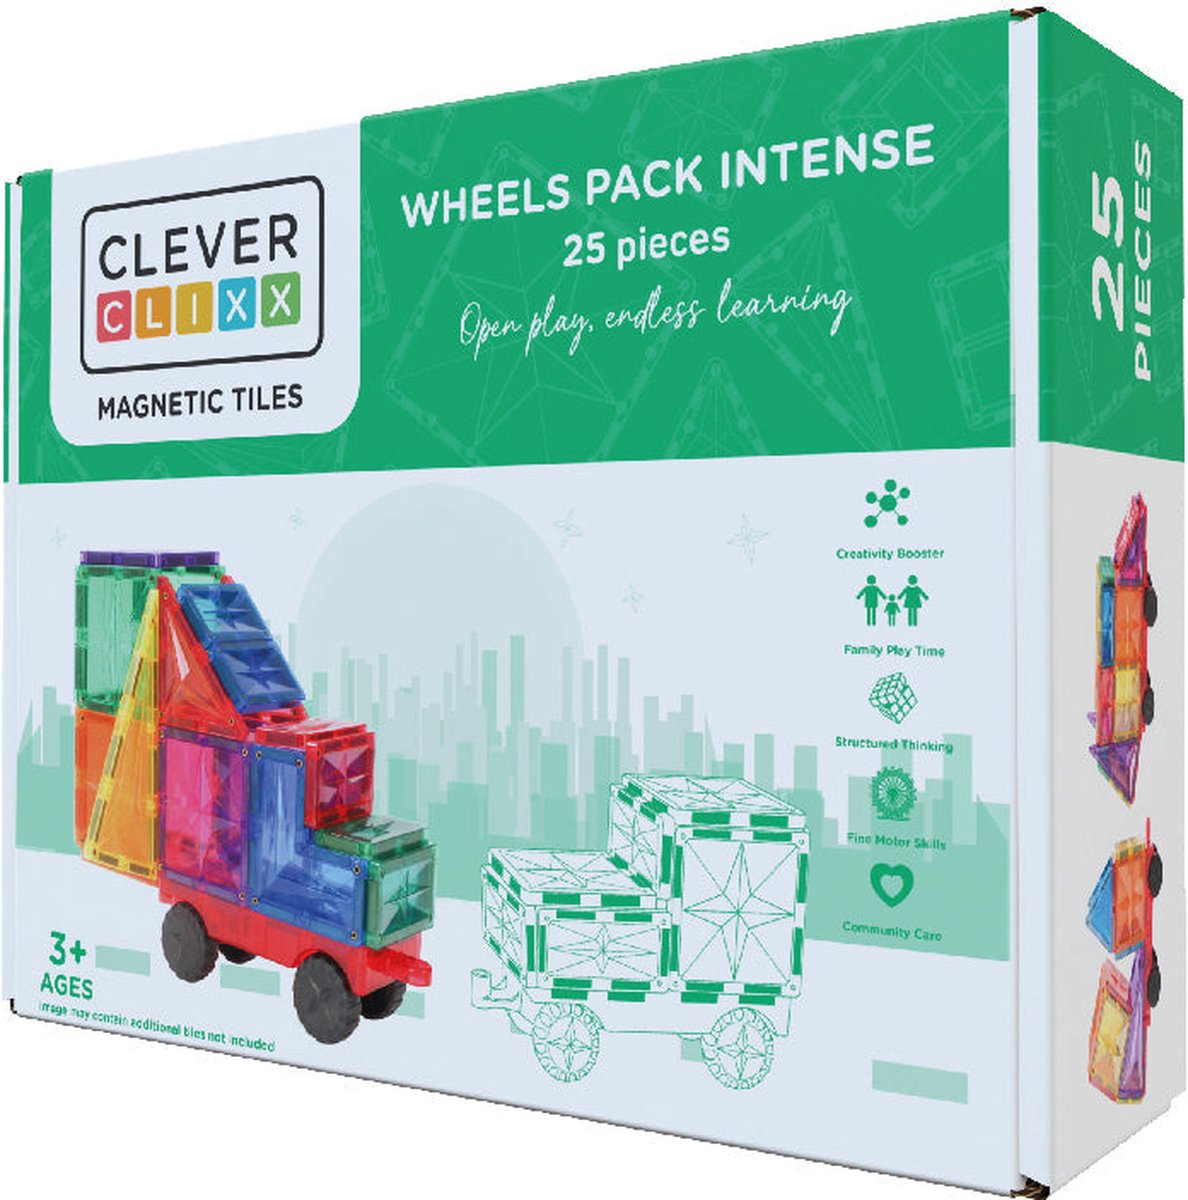 Cleverclixx Wheels Pack Intense | 25 Stuks